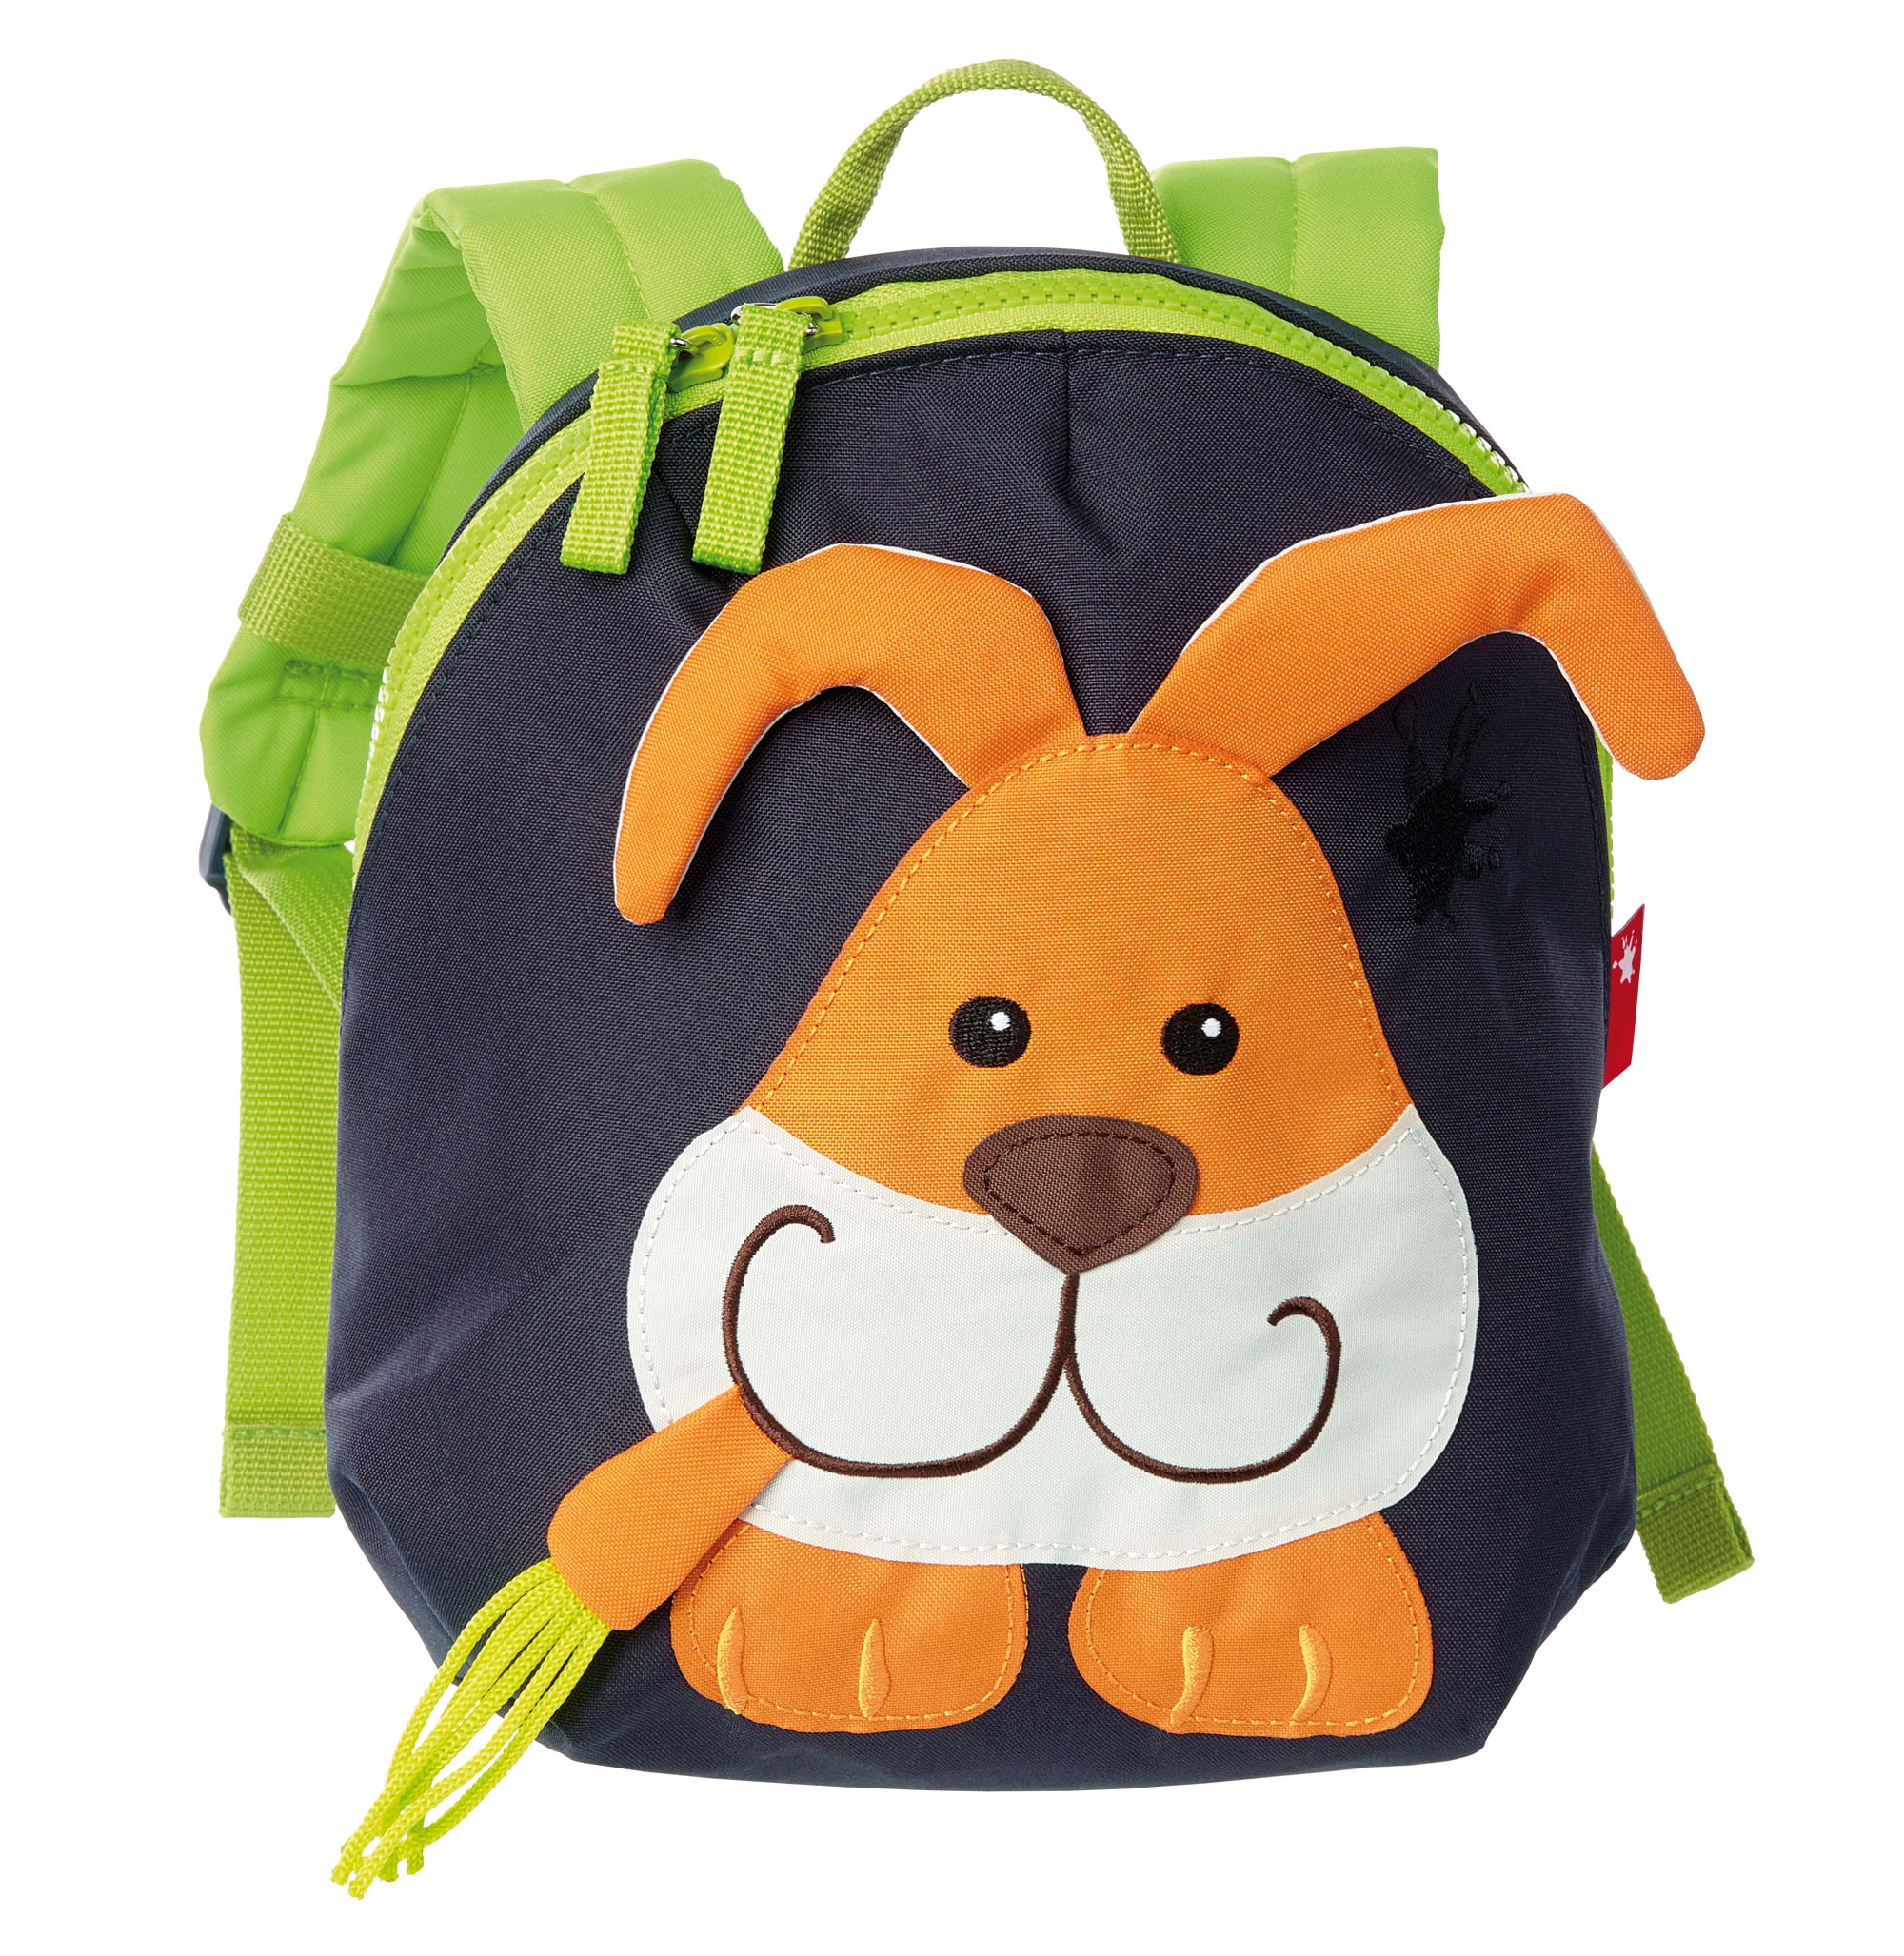 Kids' backpack rabbit